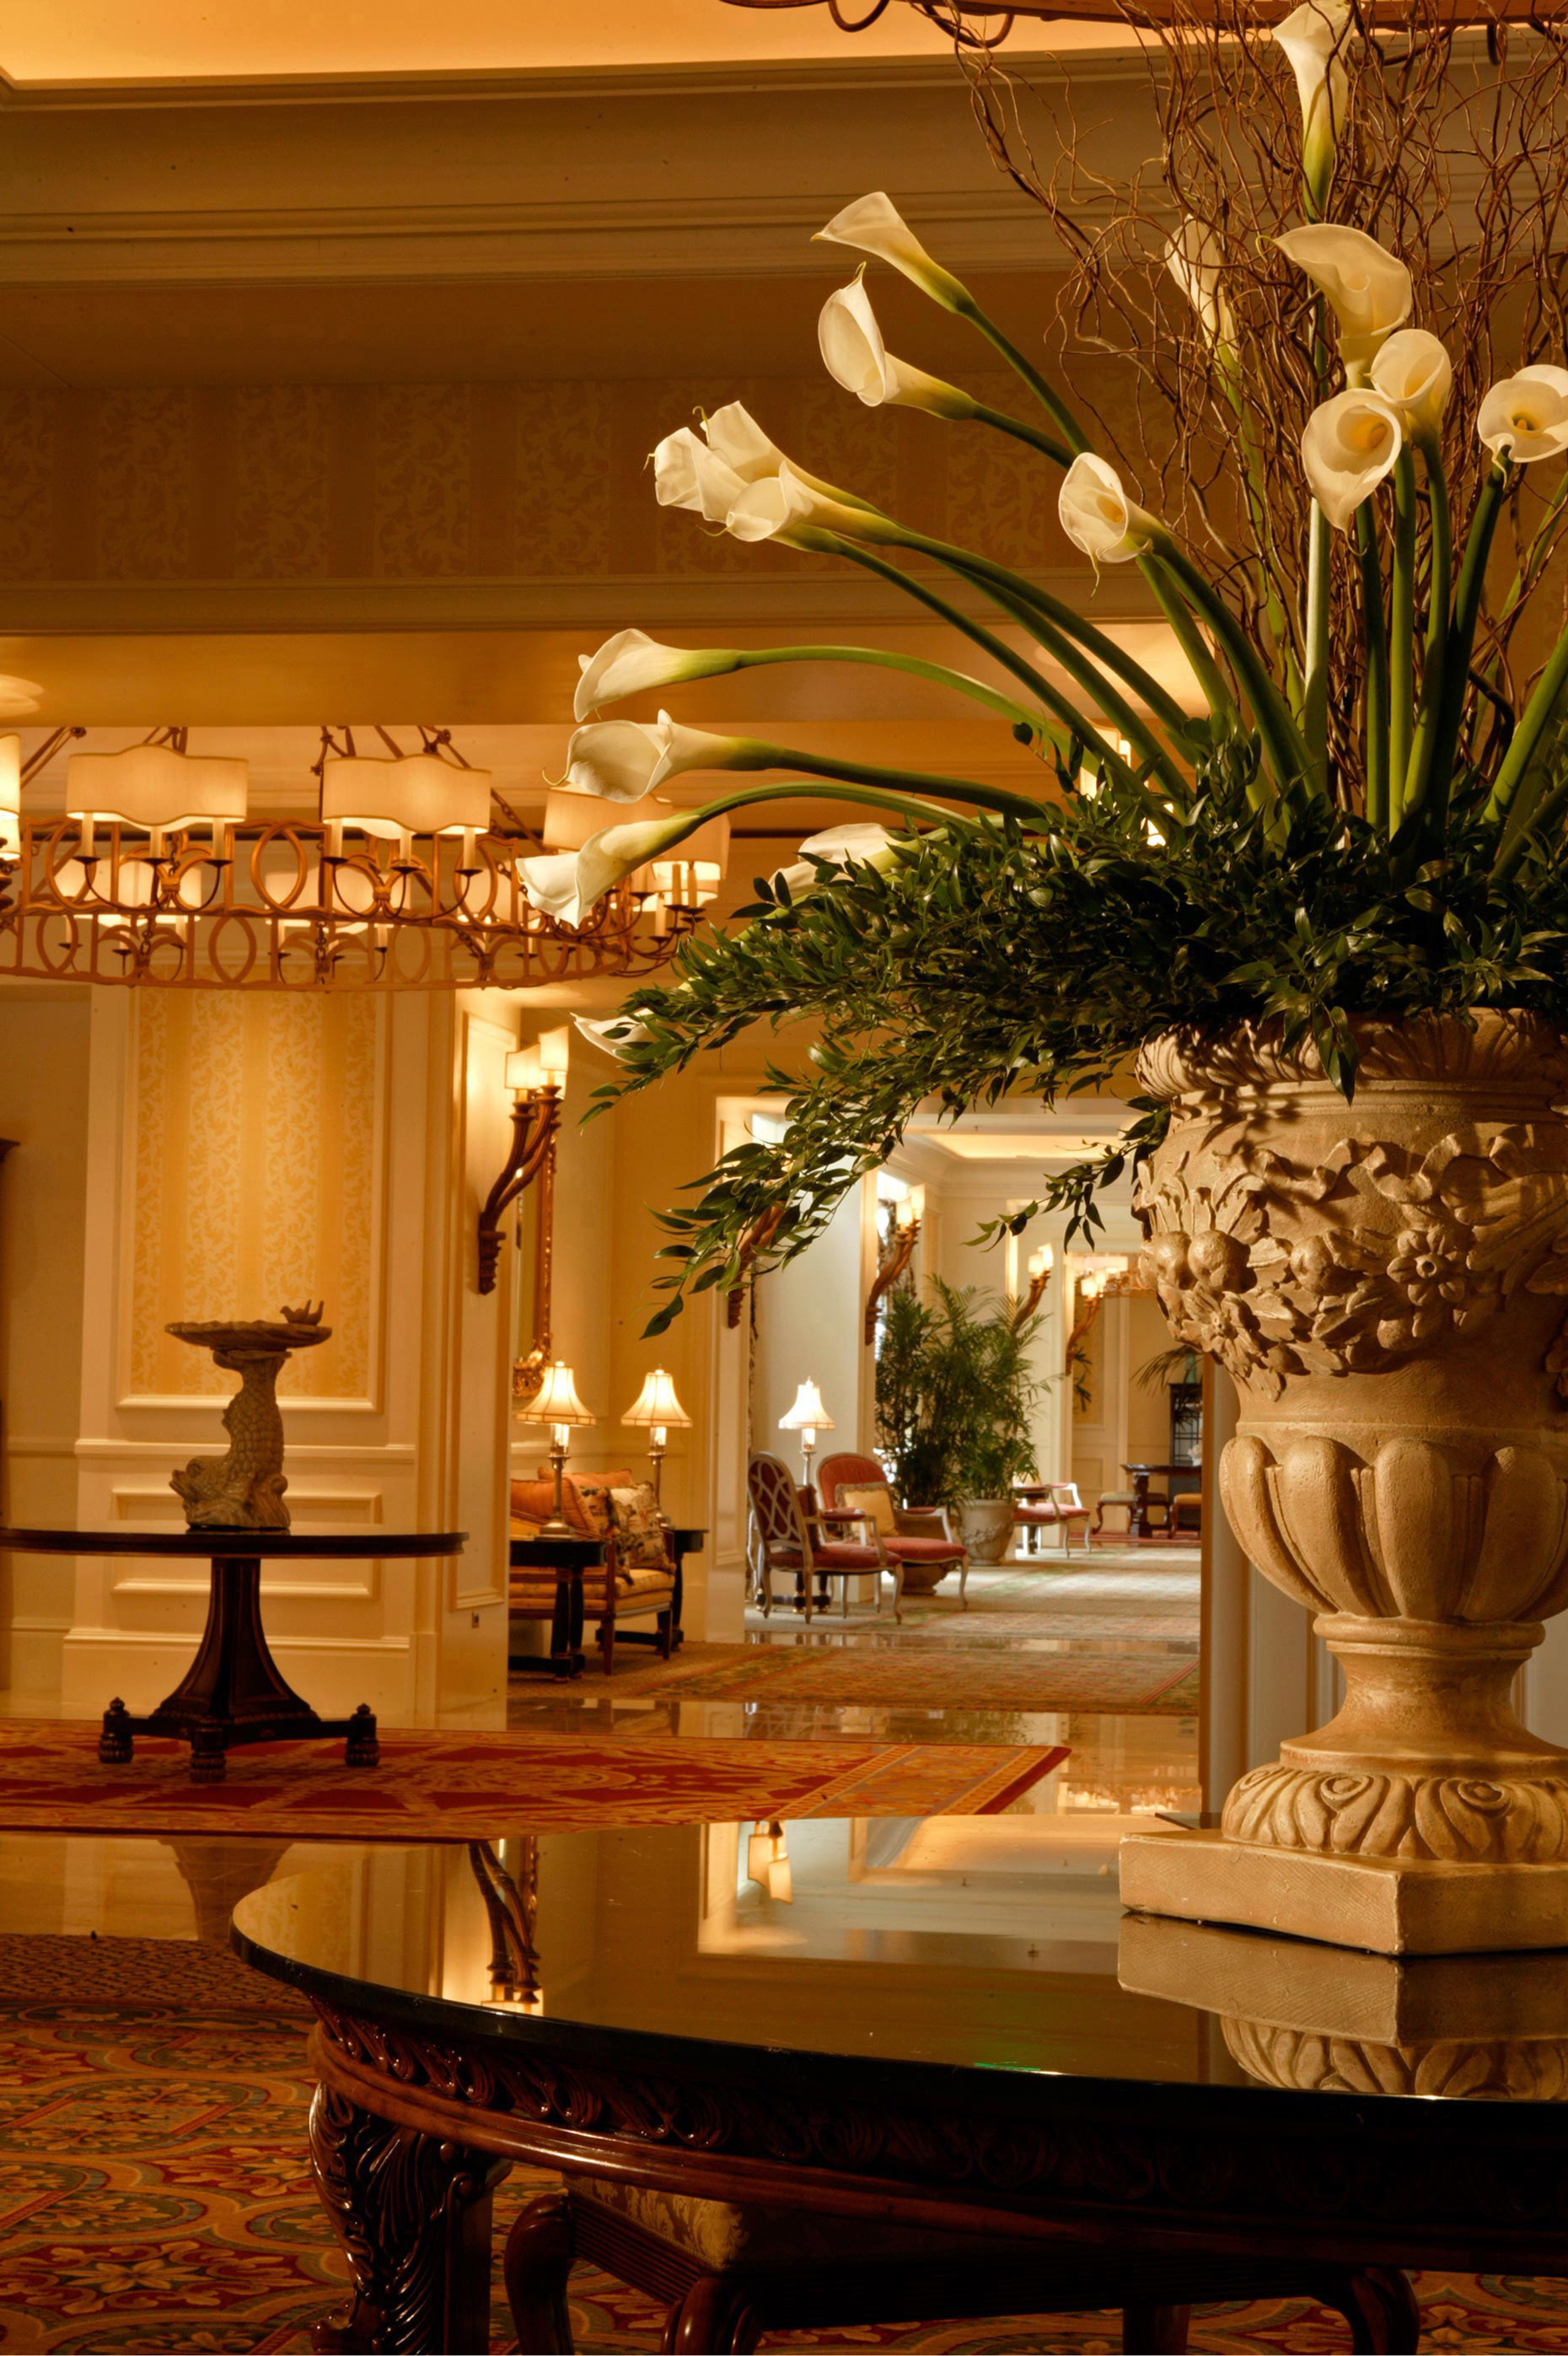  Hotel & Resort Photography | Ritz Carlton Hotel Lobby Orlando Florida